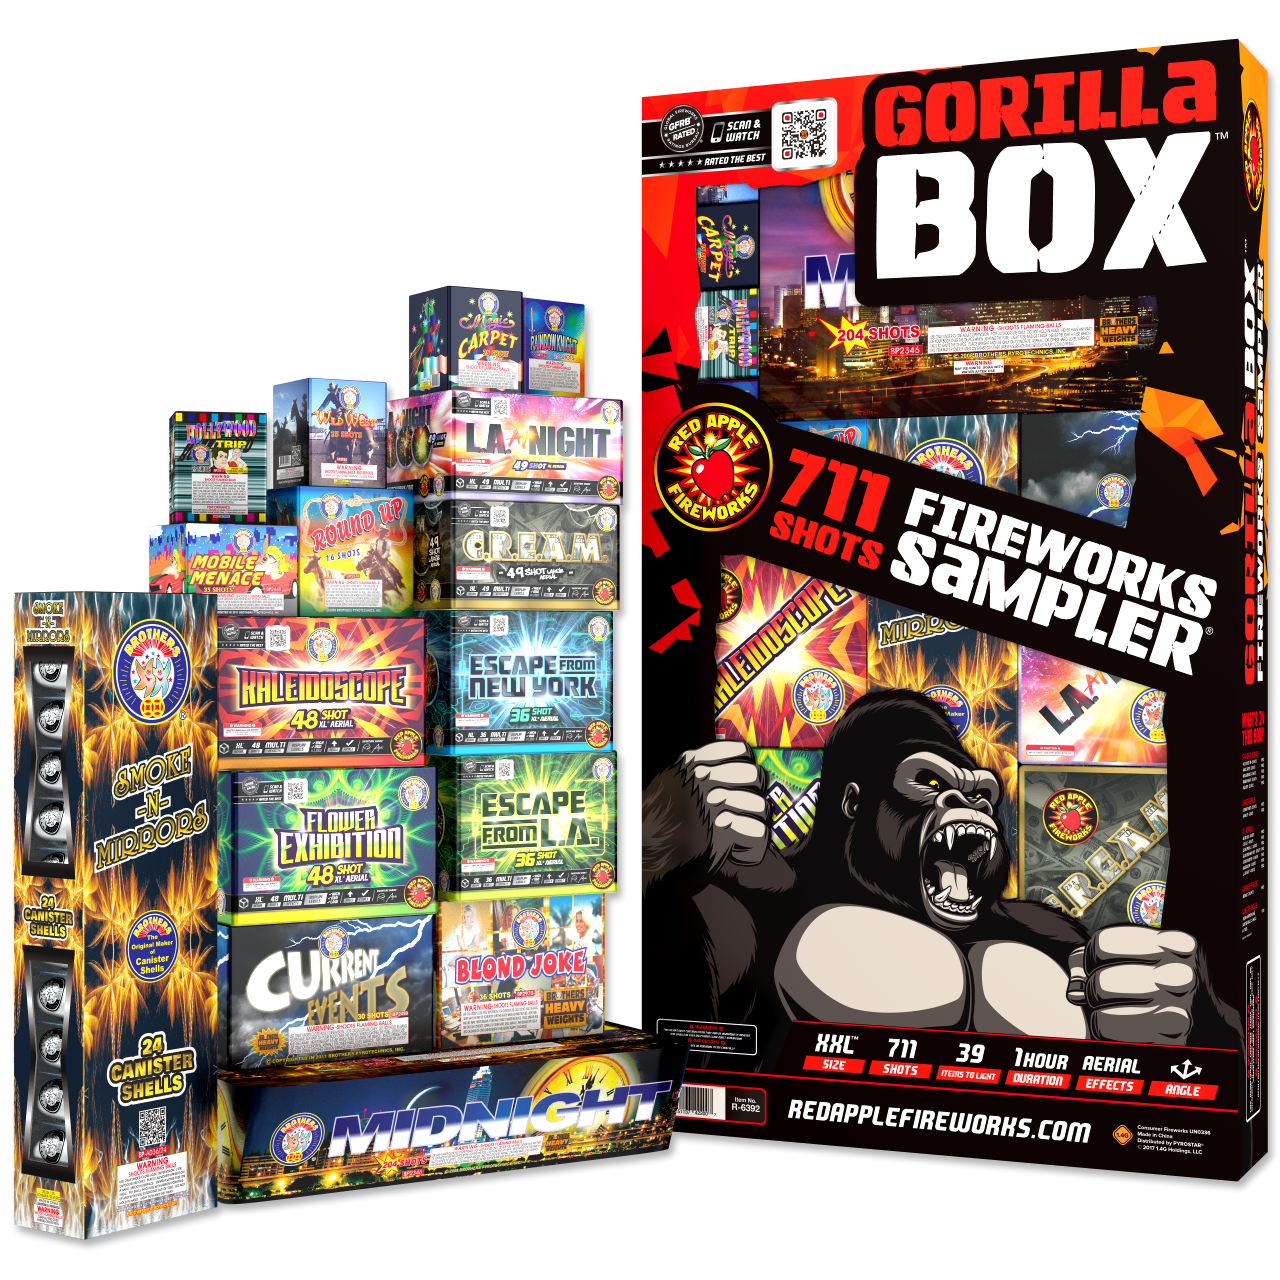 Gorilla Box Fireworks Sampler (case)- - Red Apple Fireworks